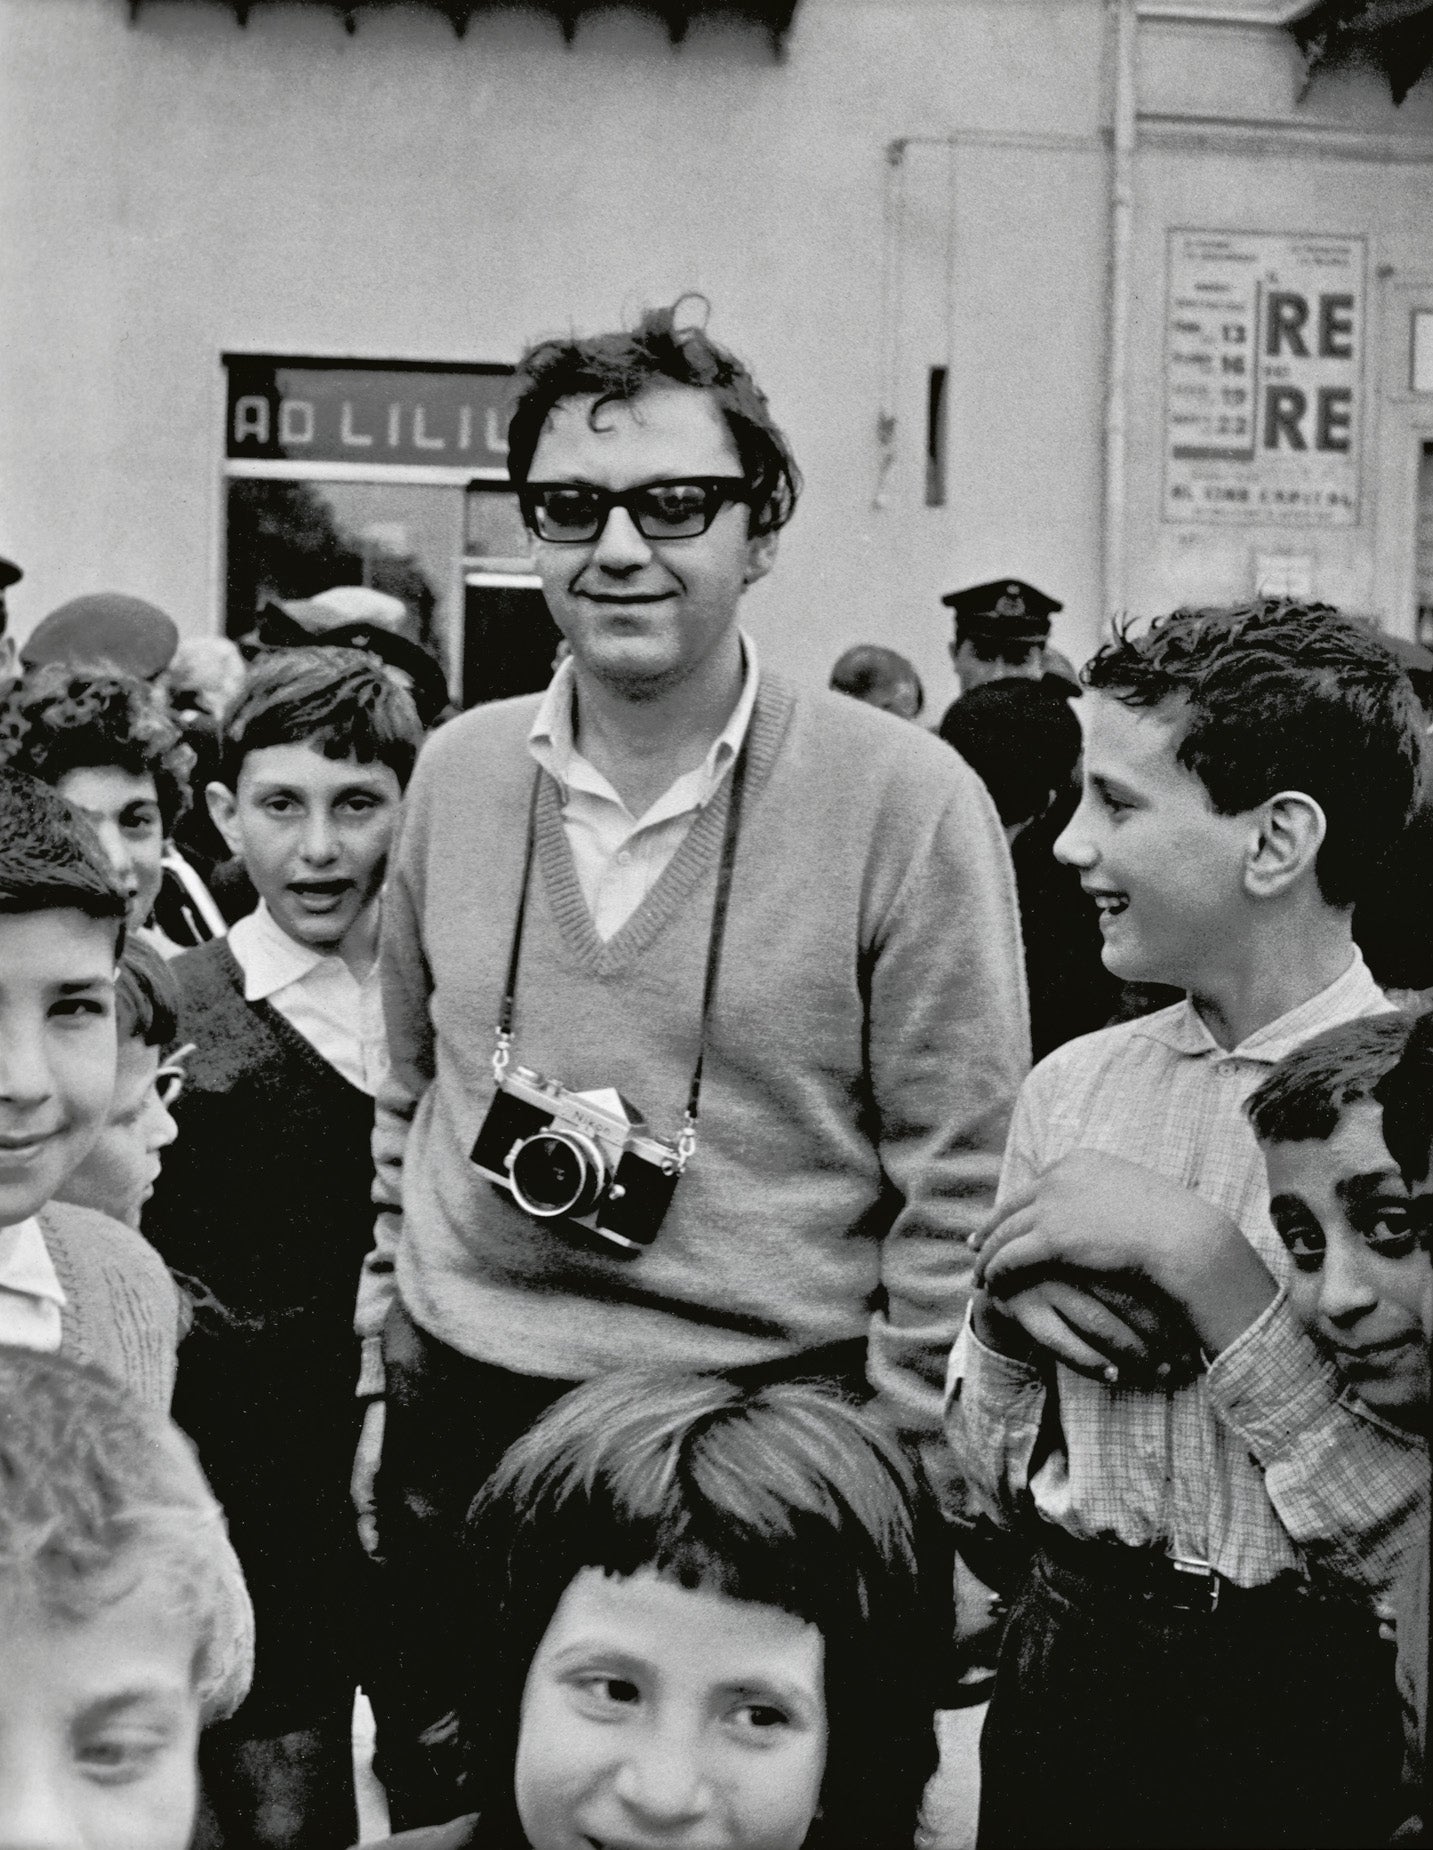 Leiter in Sicily, circa 1960